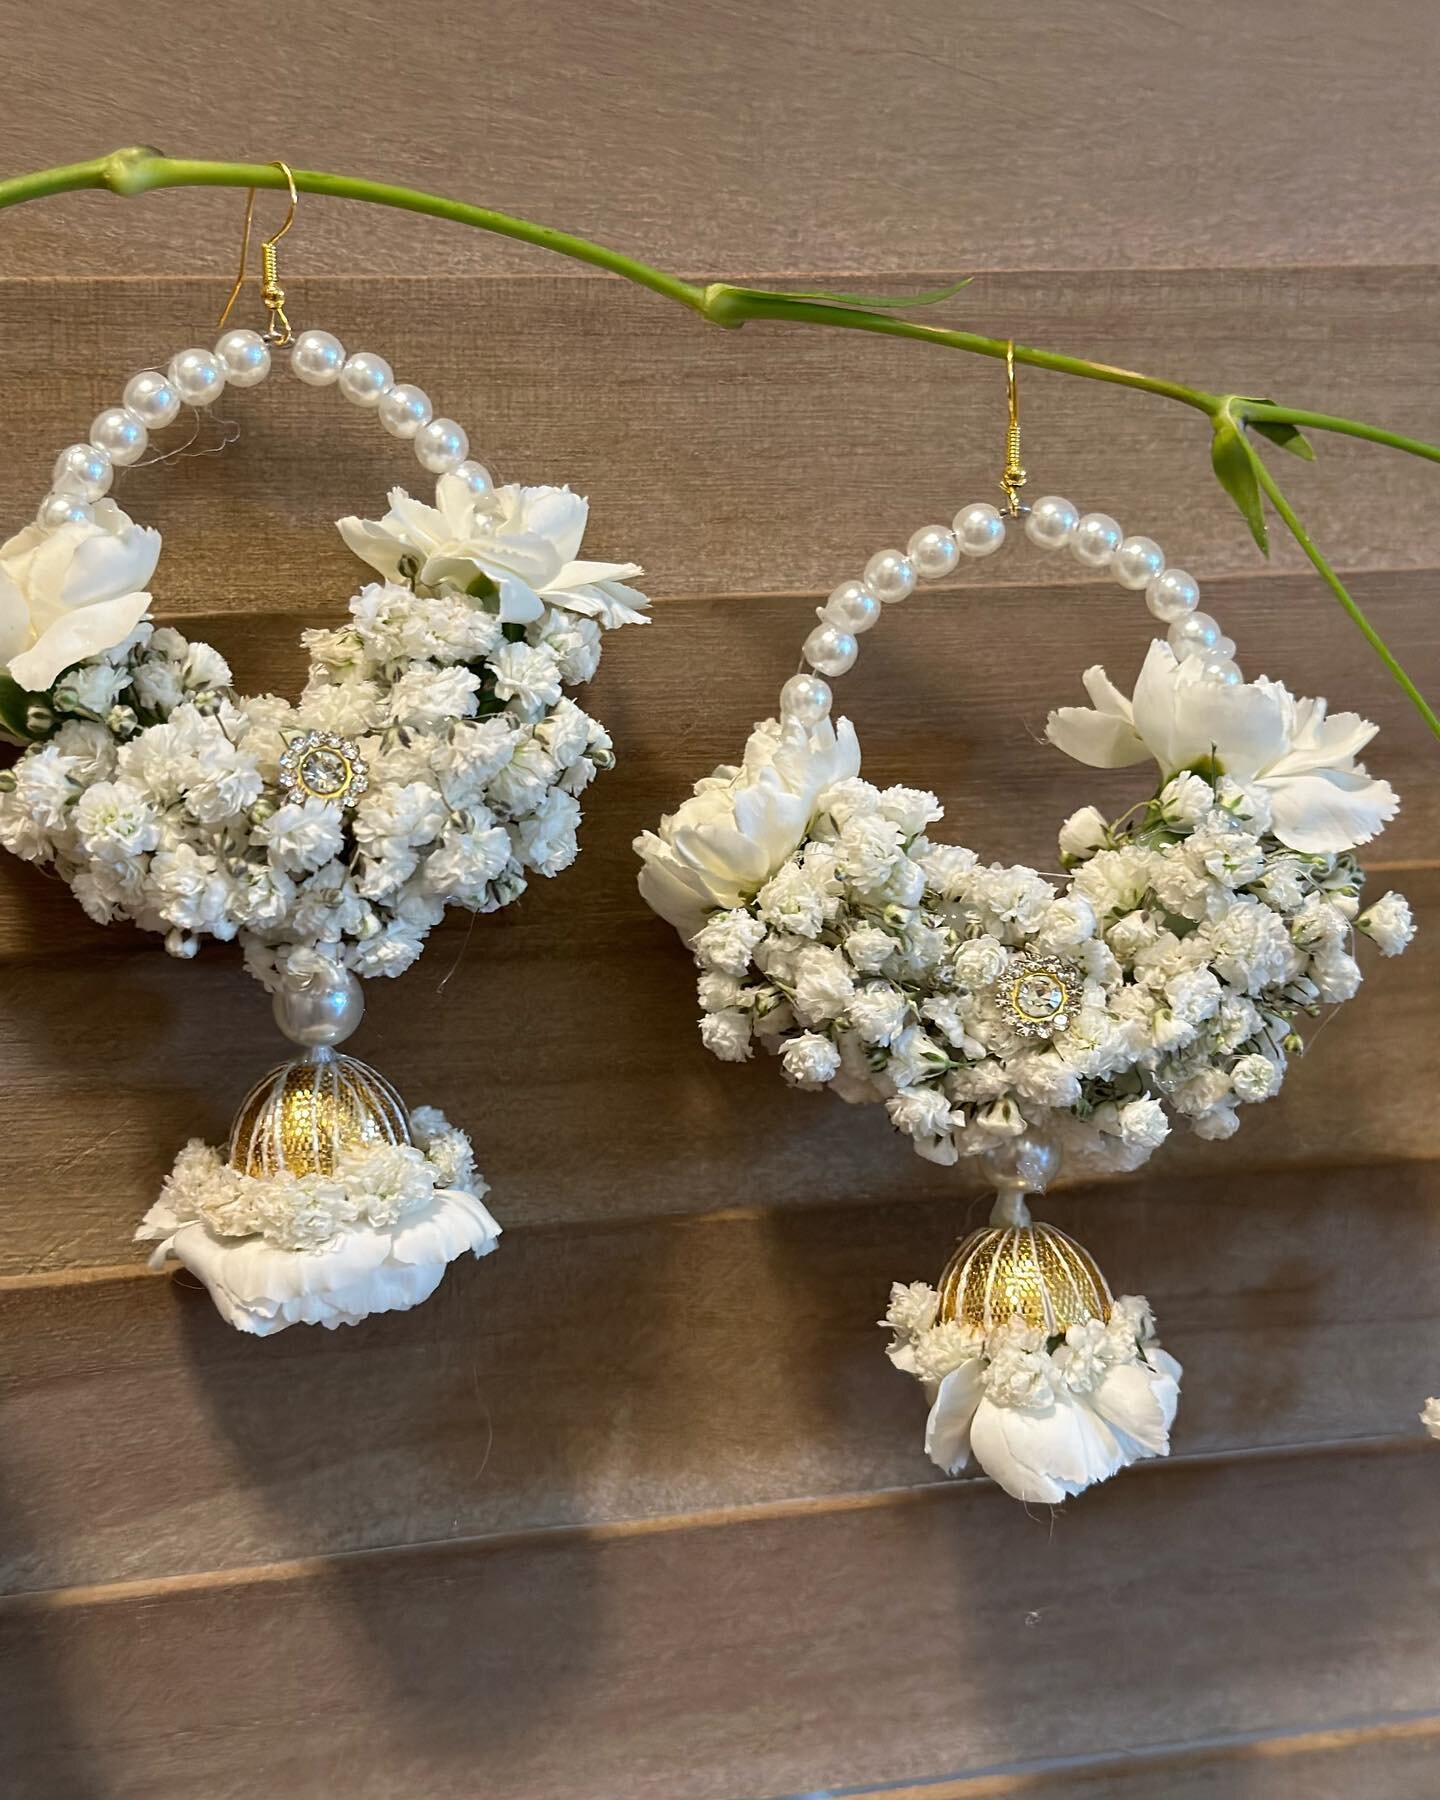 Love how this fresh flower jewelry turned out for the beautiful bride @amu_bunny . 
Mua - @dolledupbylulu 
Henna - @hennabytulsi 
Photography- @brandonandrewsphotography 
#freshflowerjewelry #mehendijewelry #jhumkis #atlantaflowerjewelry #atlantasout